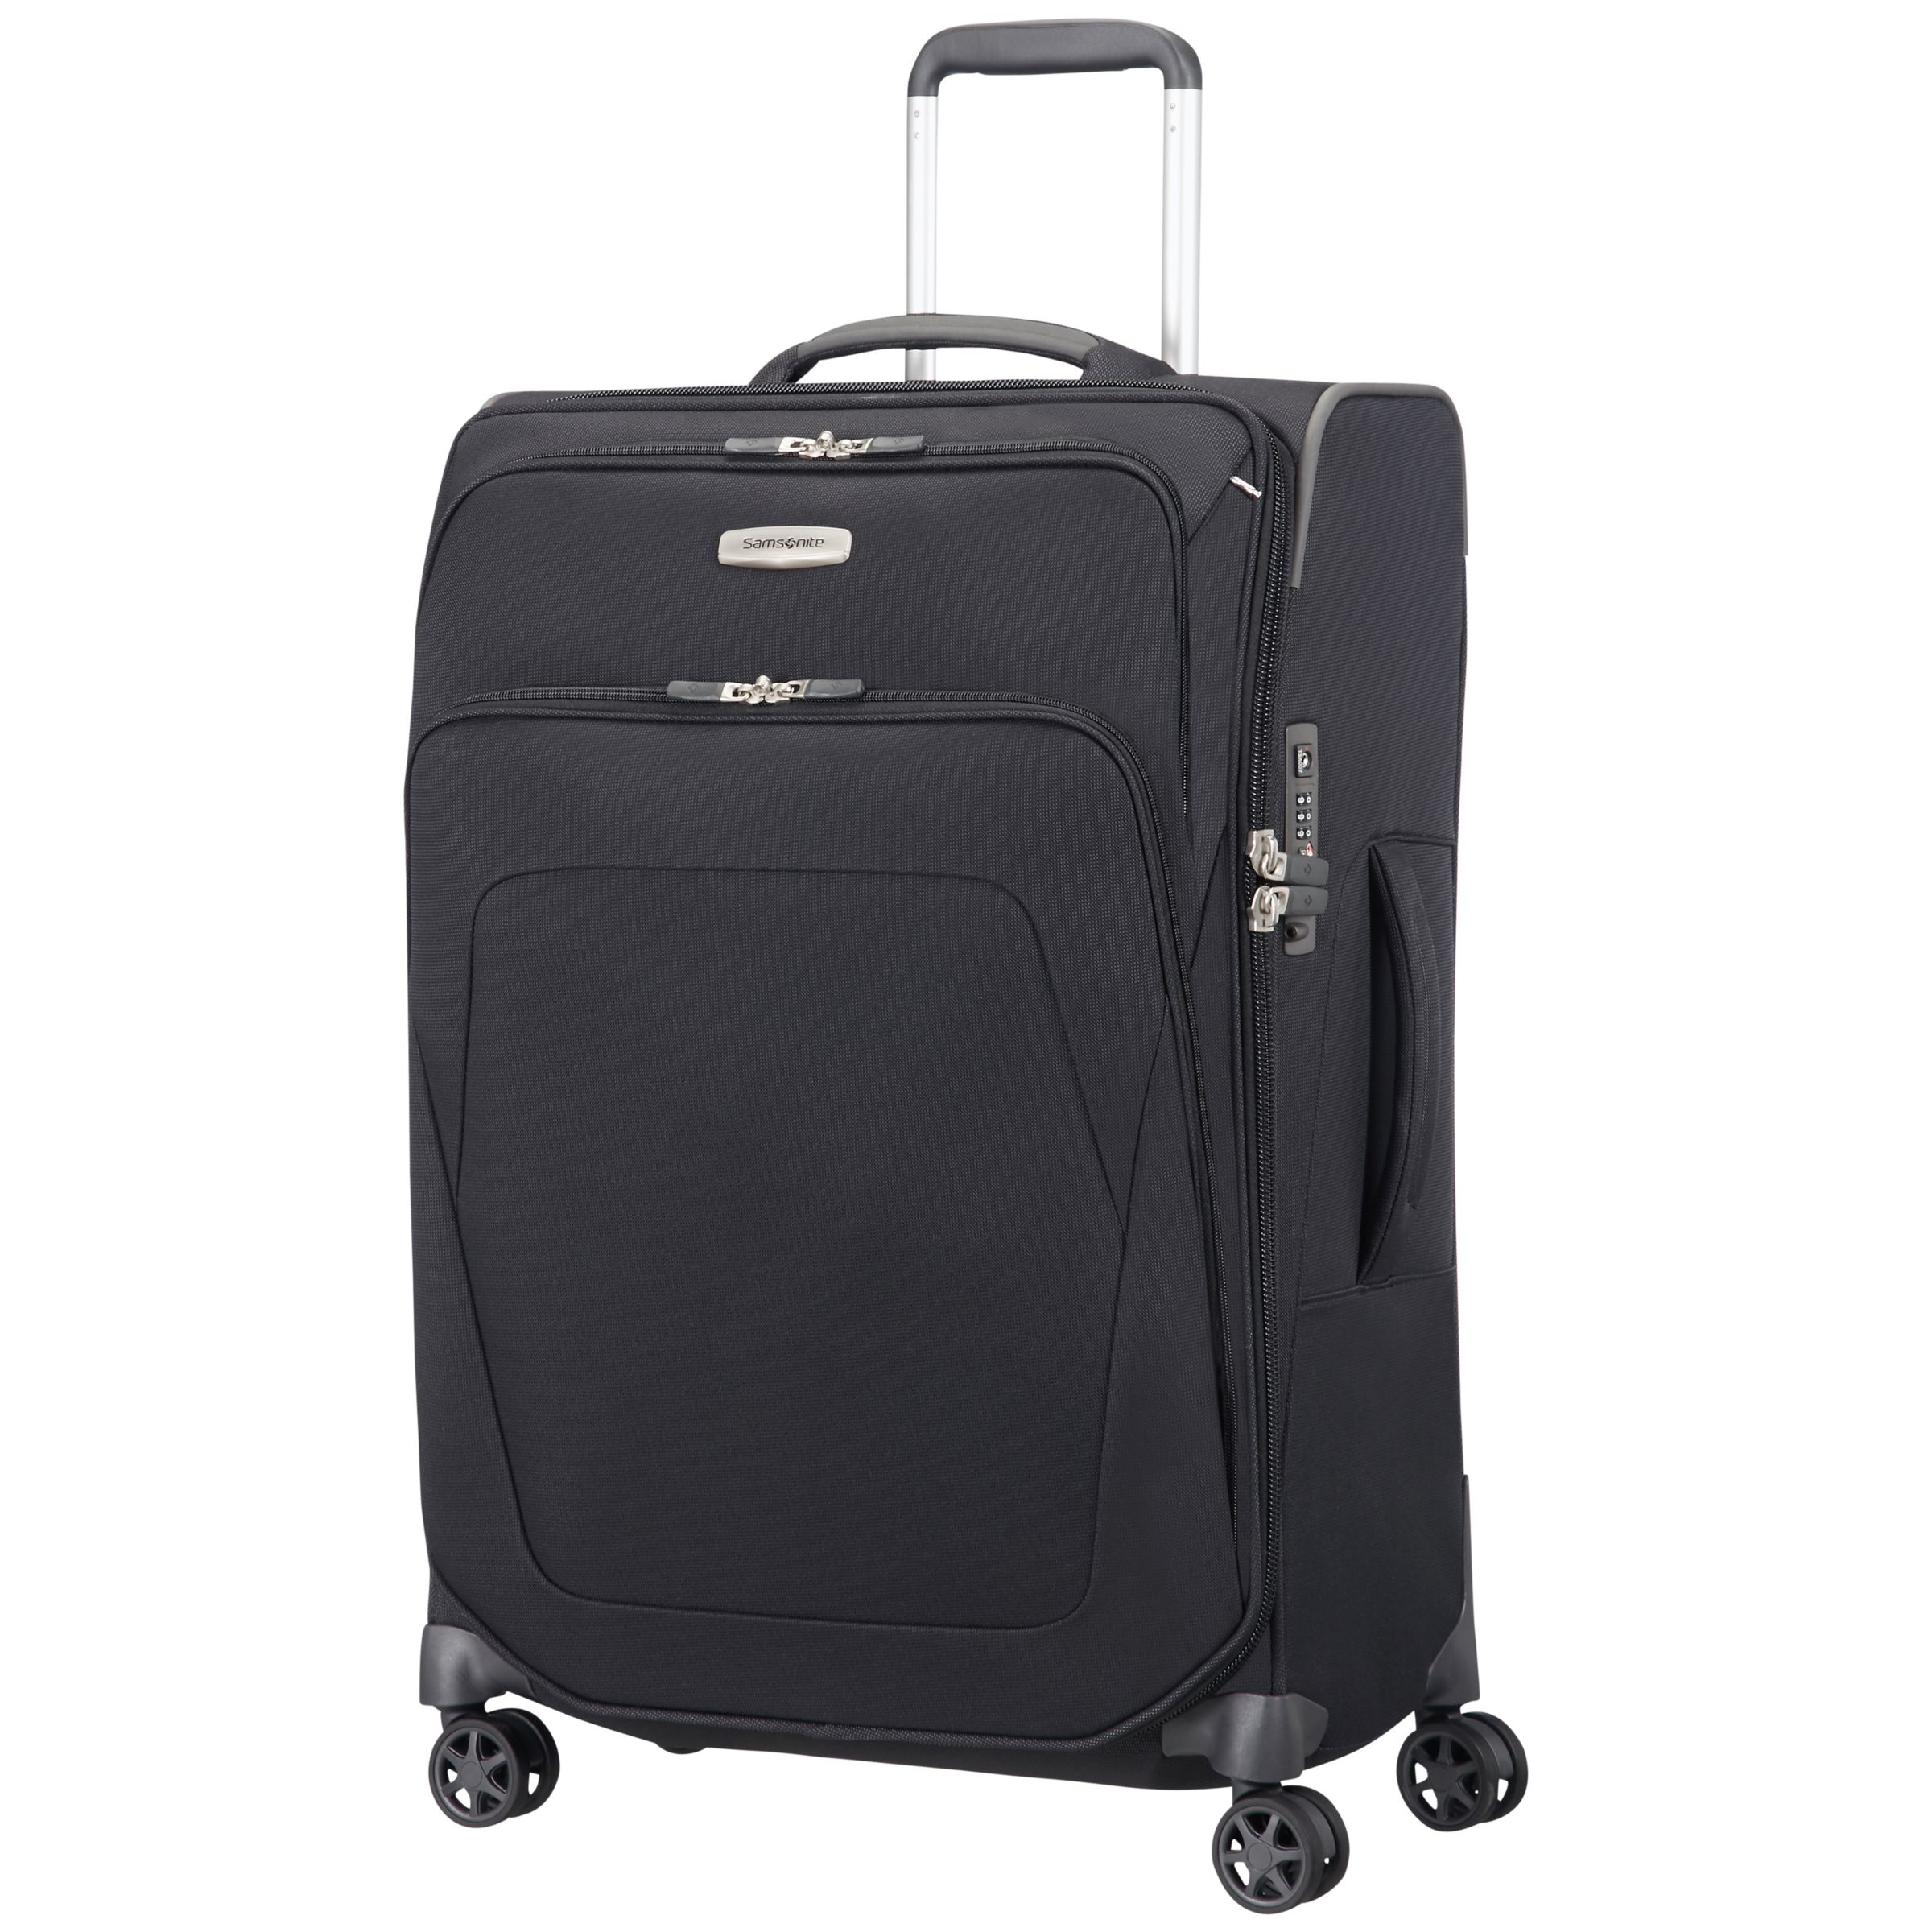 Samsonite Spark SNG 67cm 4-Wheel Suitcase at John Lewis & Partners